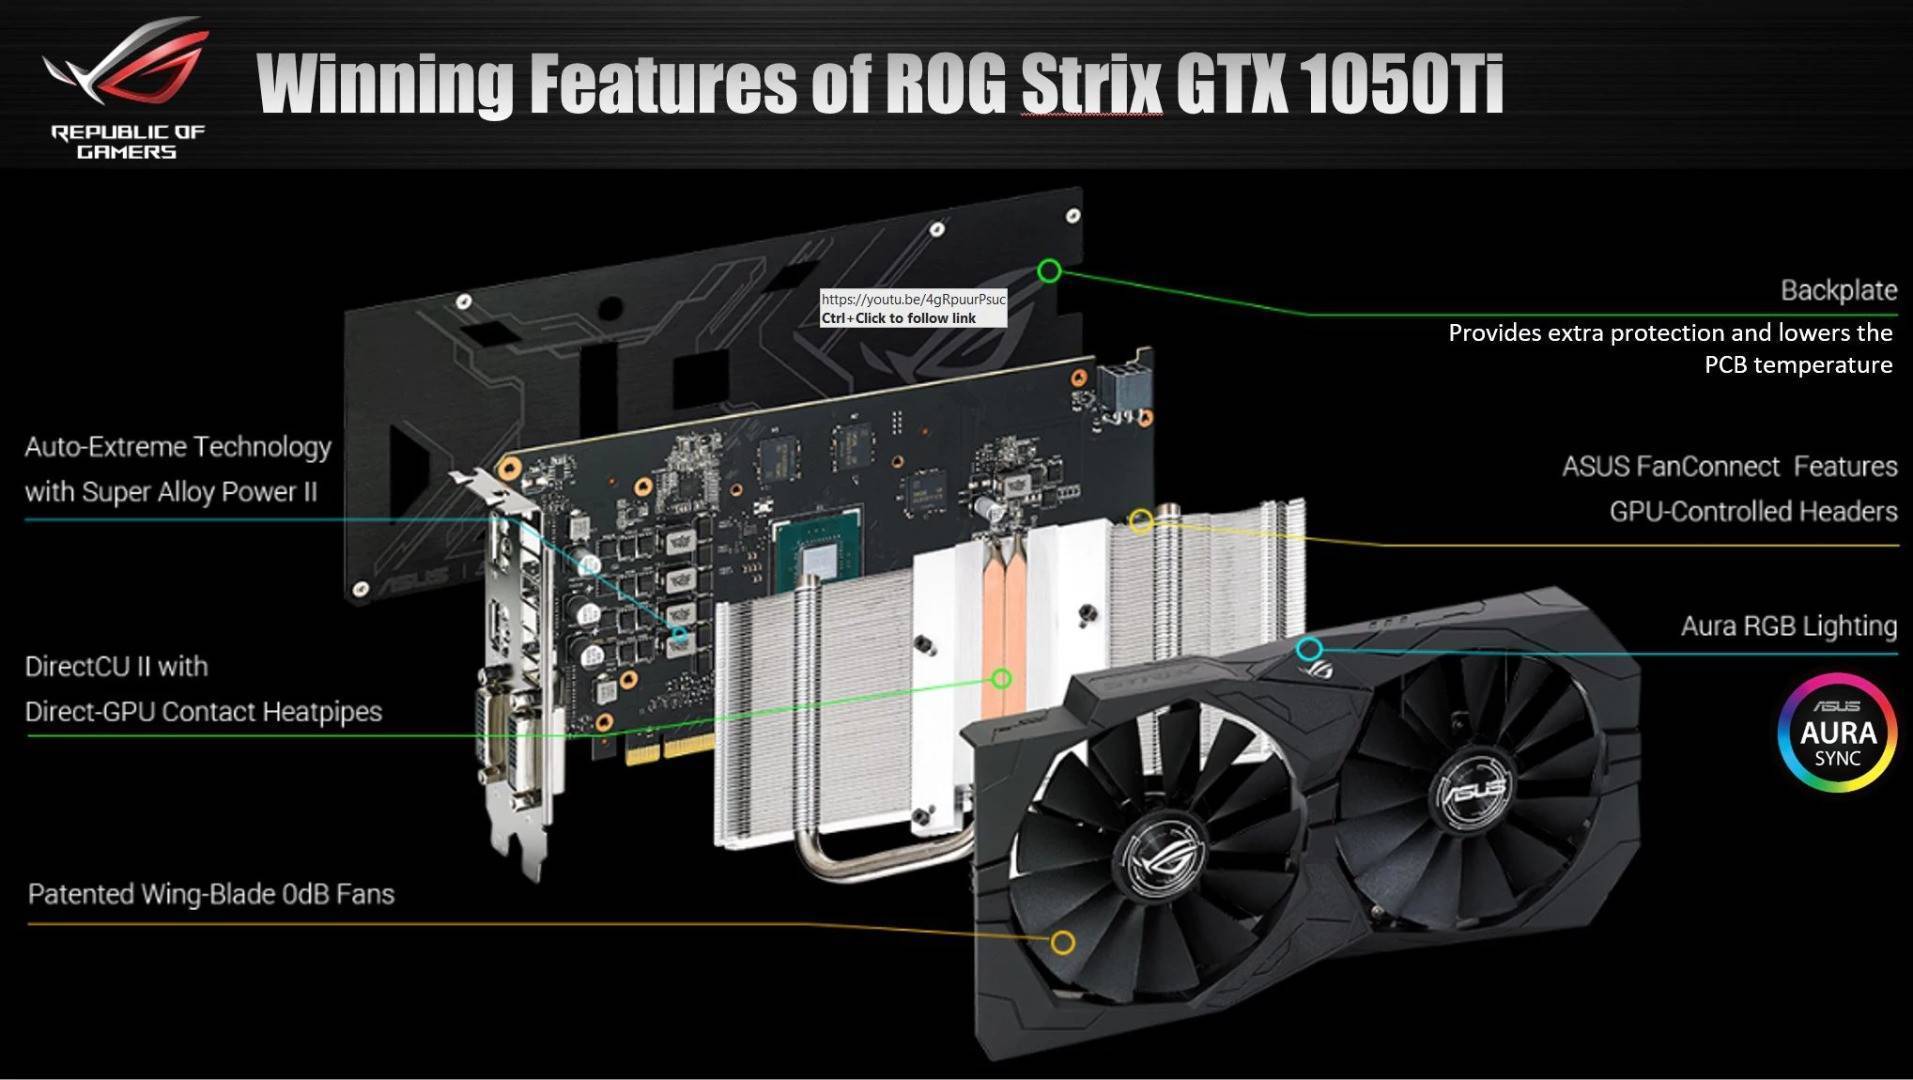 NVIDIA GEFORCE GTX 1050 Ti 4GB GDDR5 